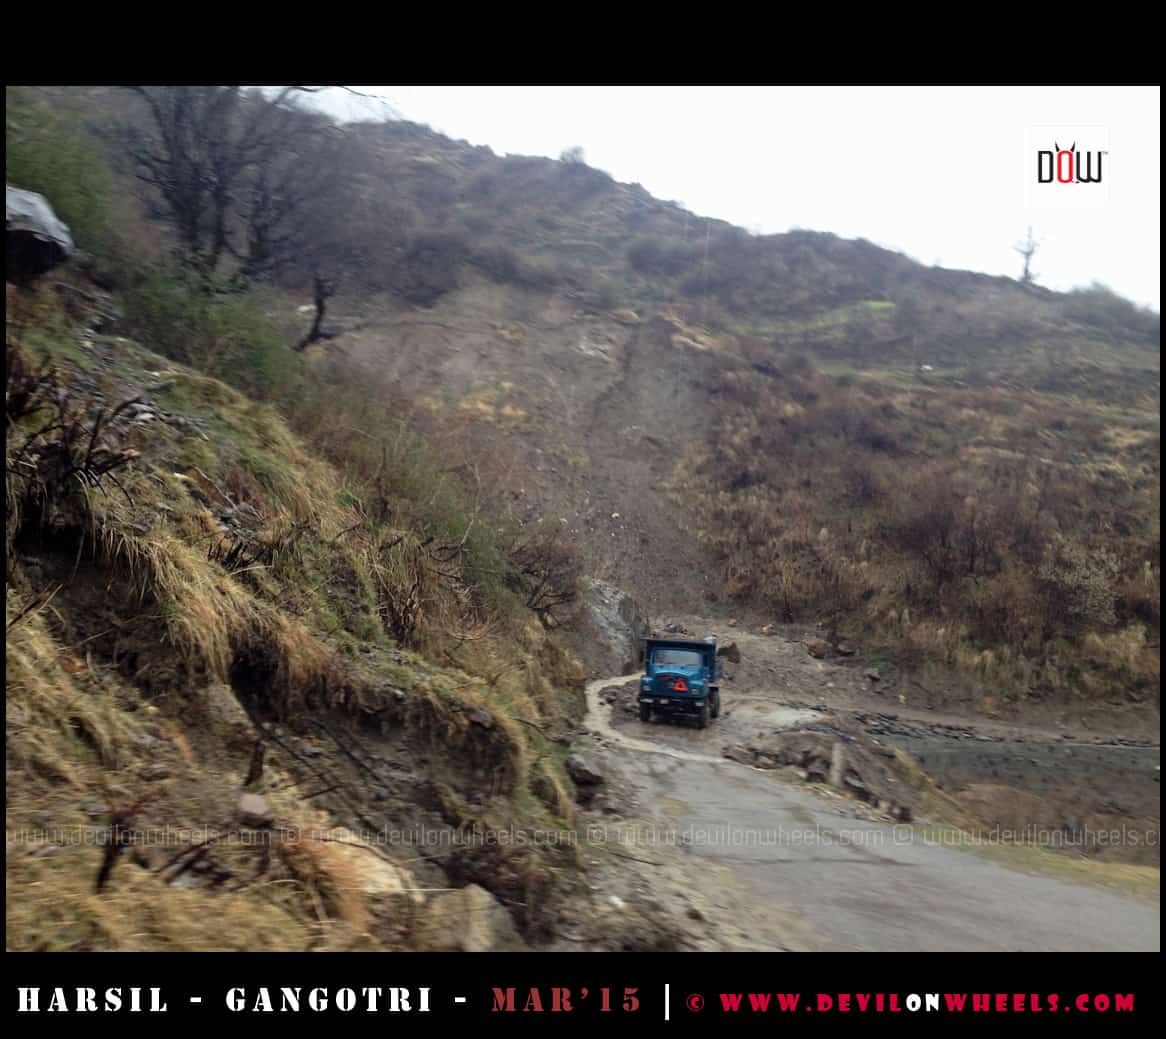 The Roads to Harsil - Gangotri